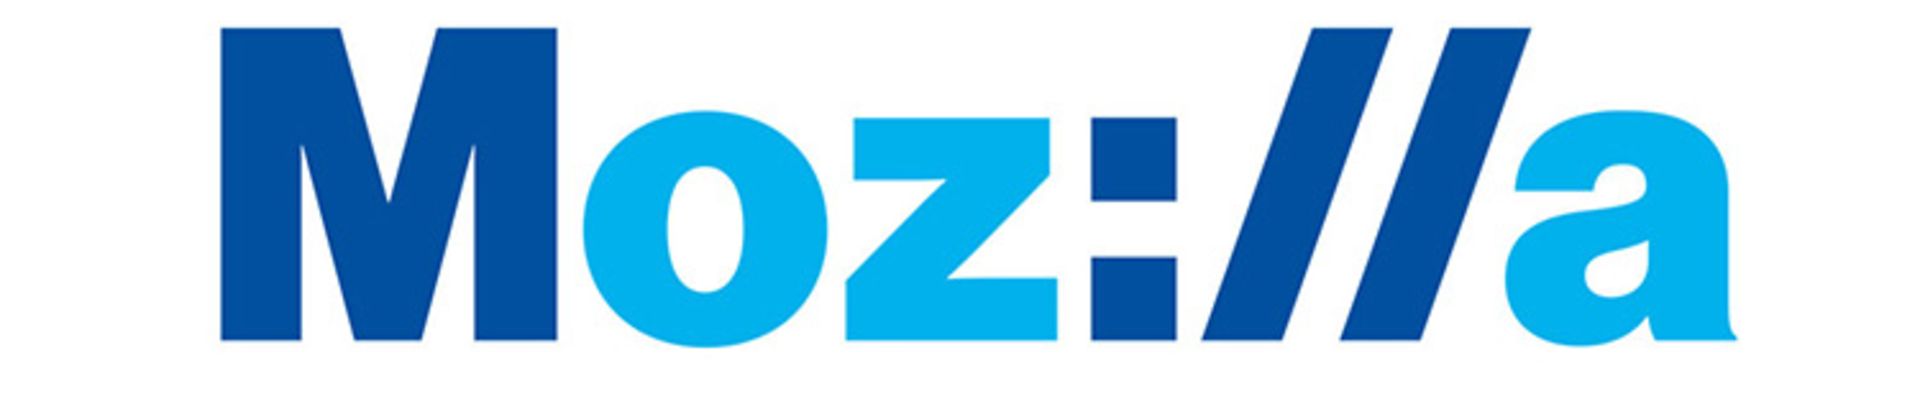 mozilla logo august version